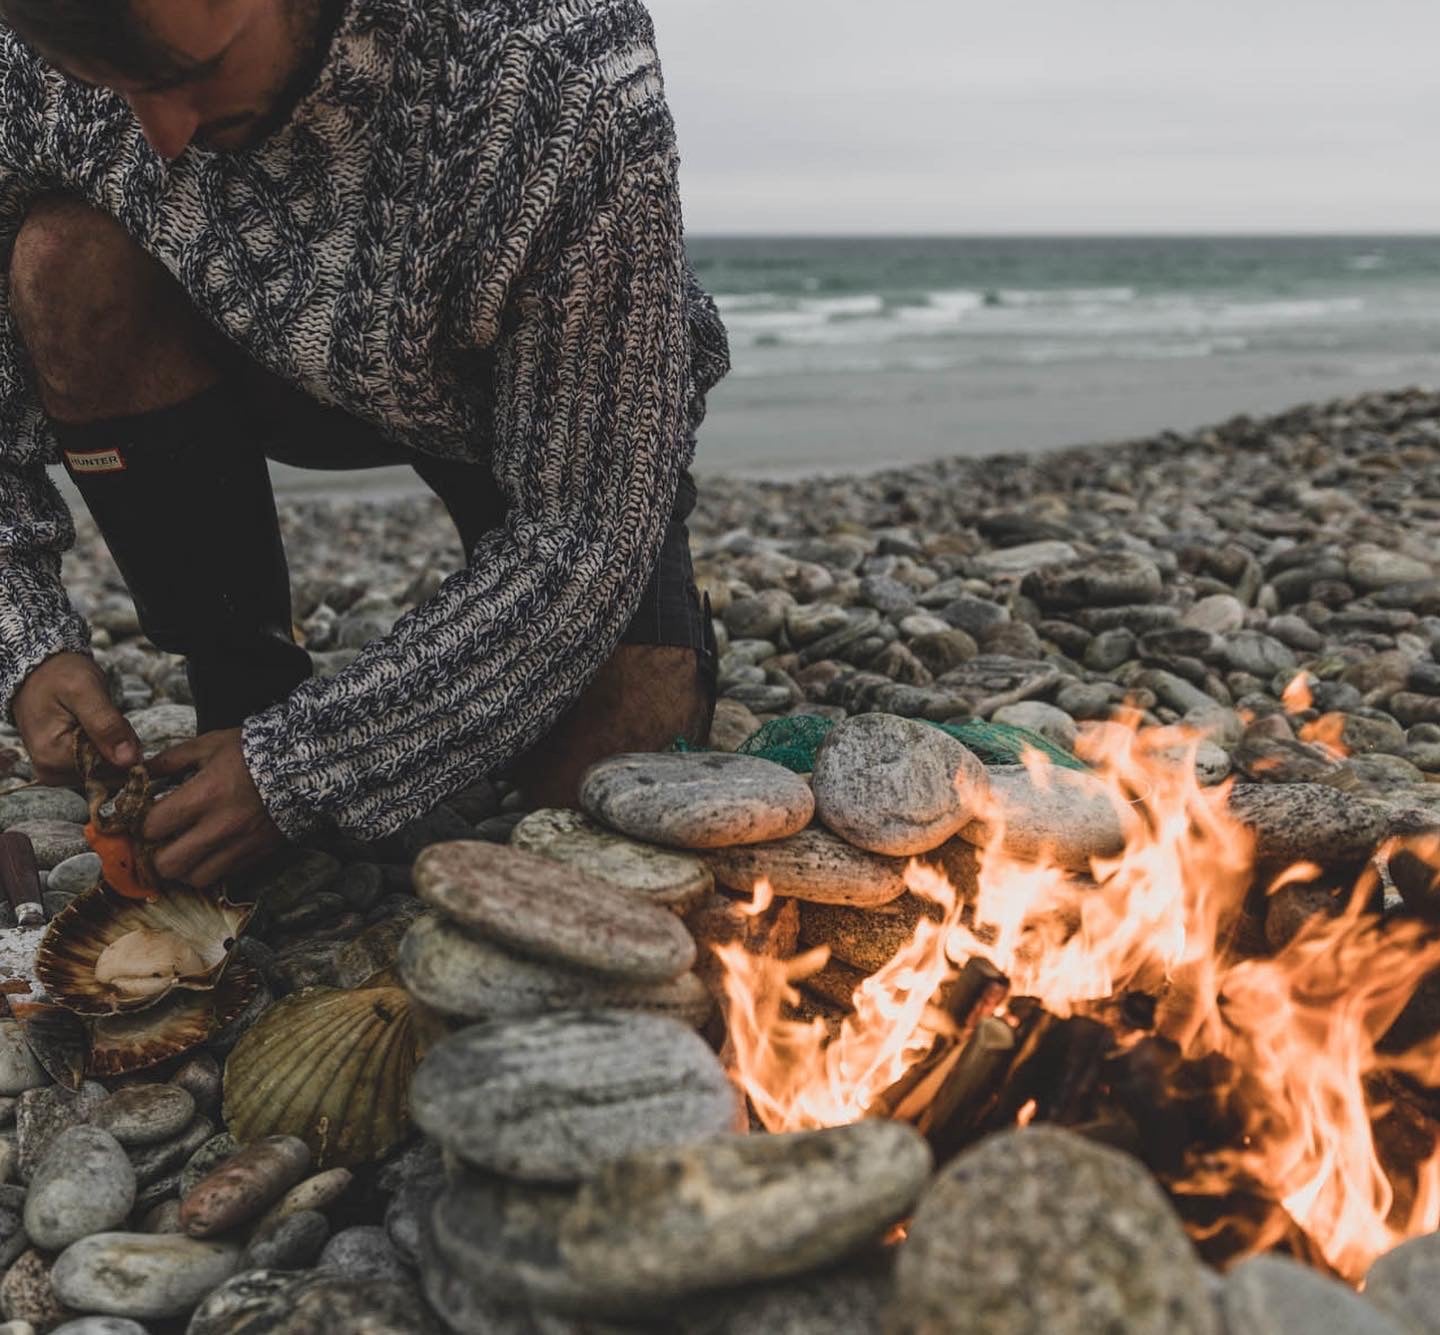 Chef preparing scallops over an open fire on a pebble beach.